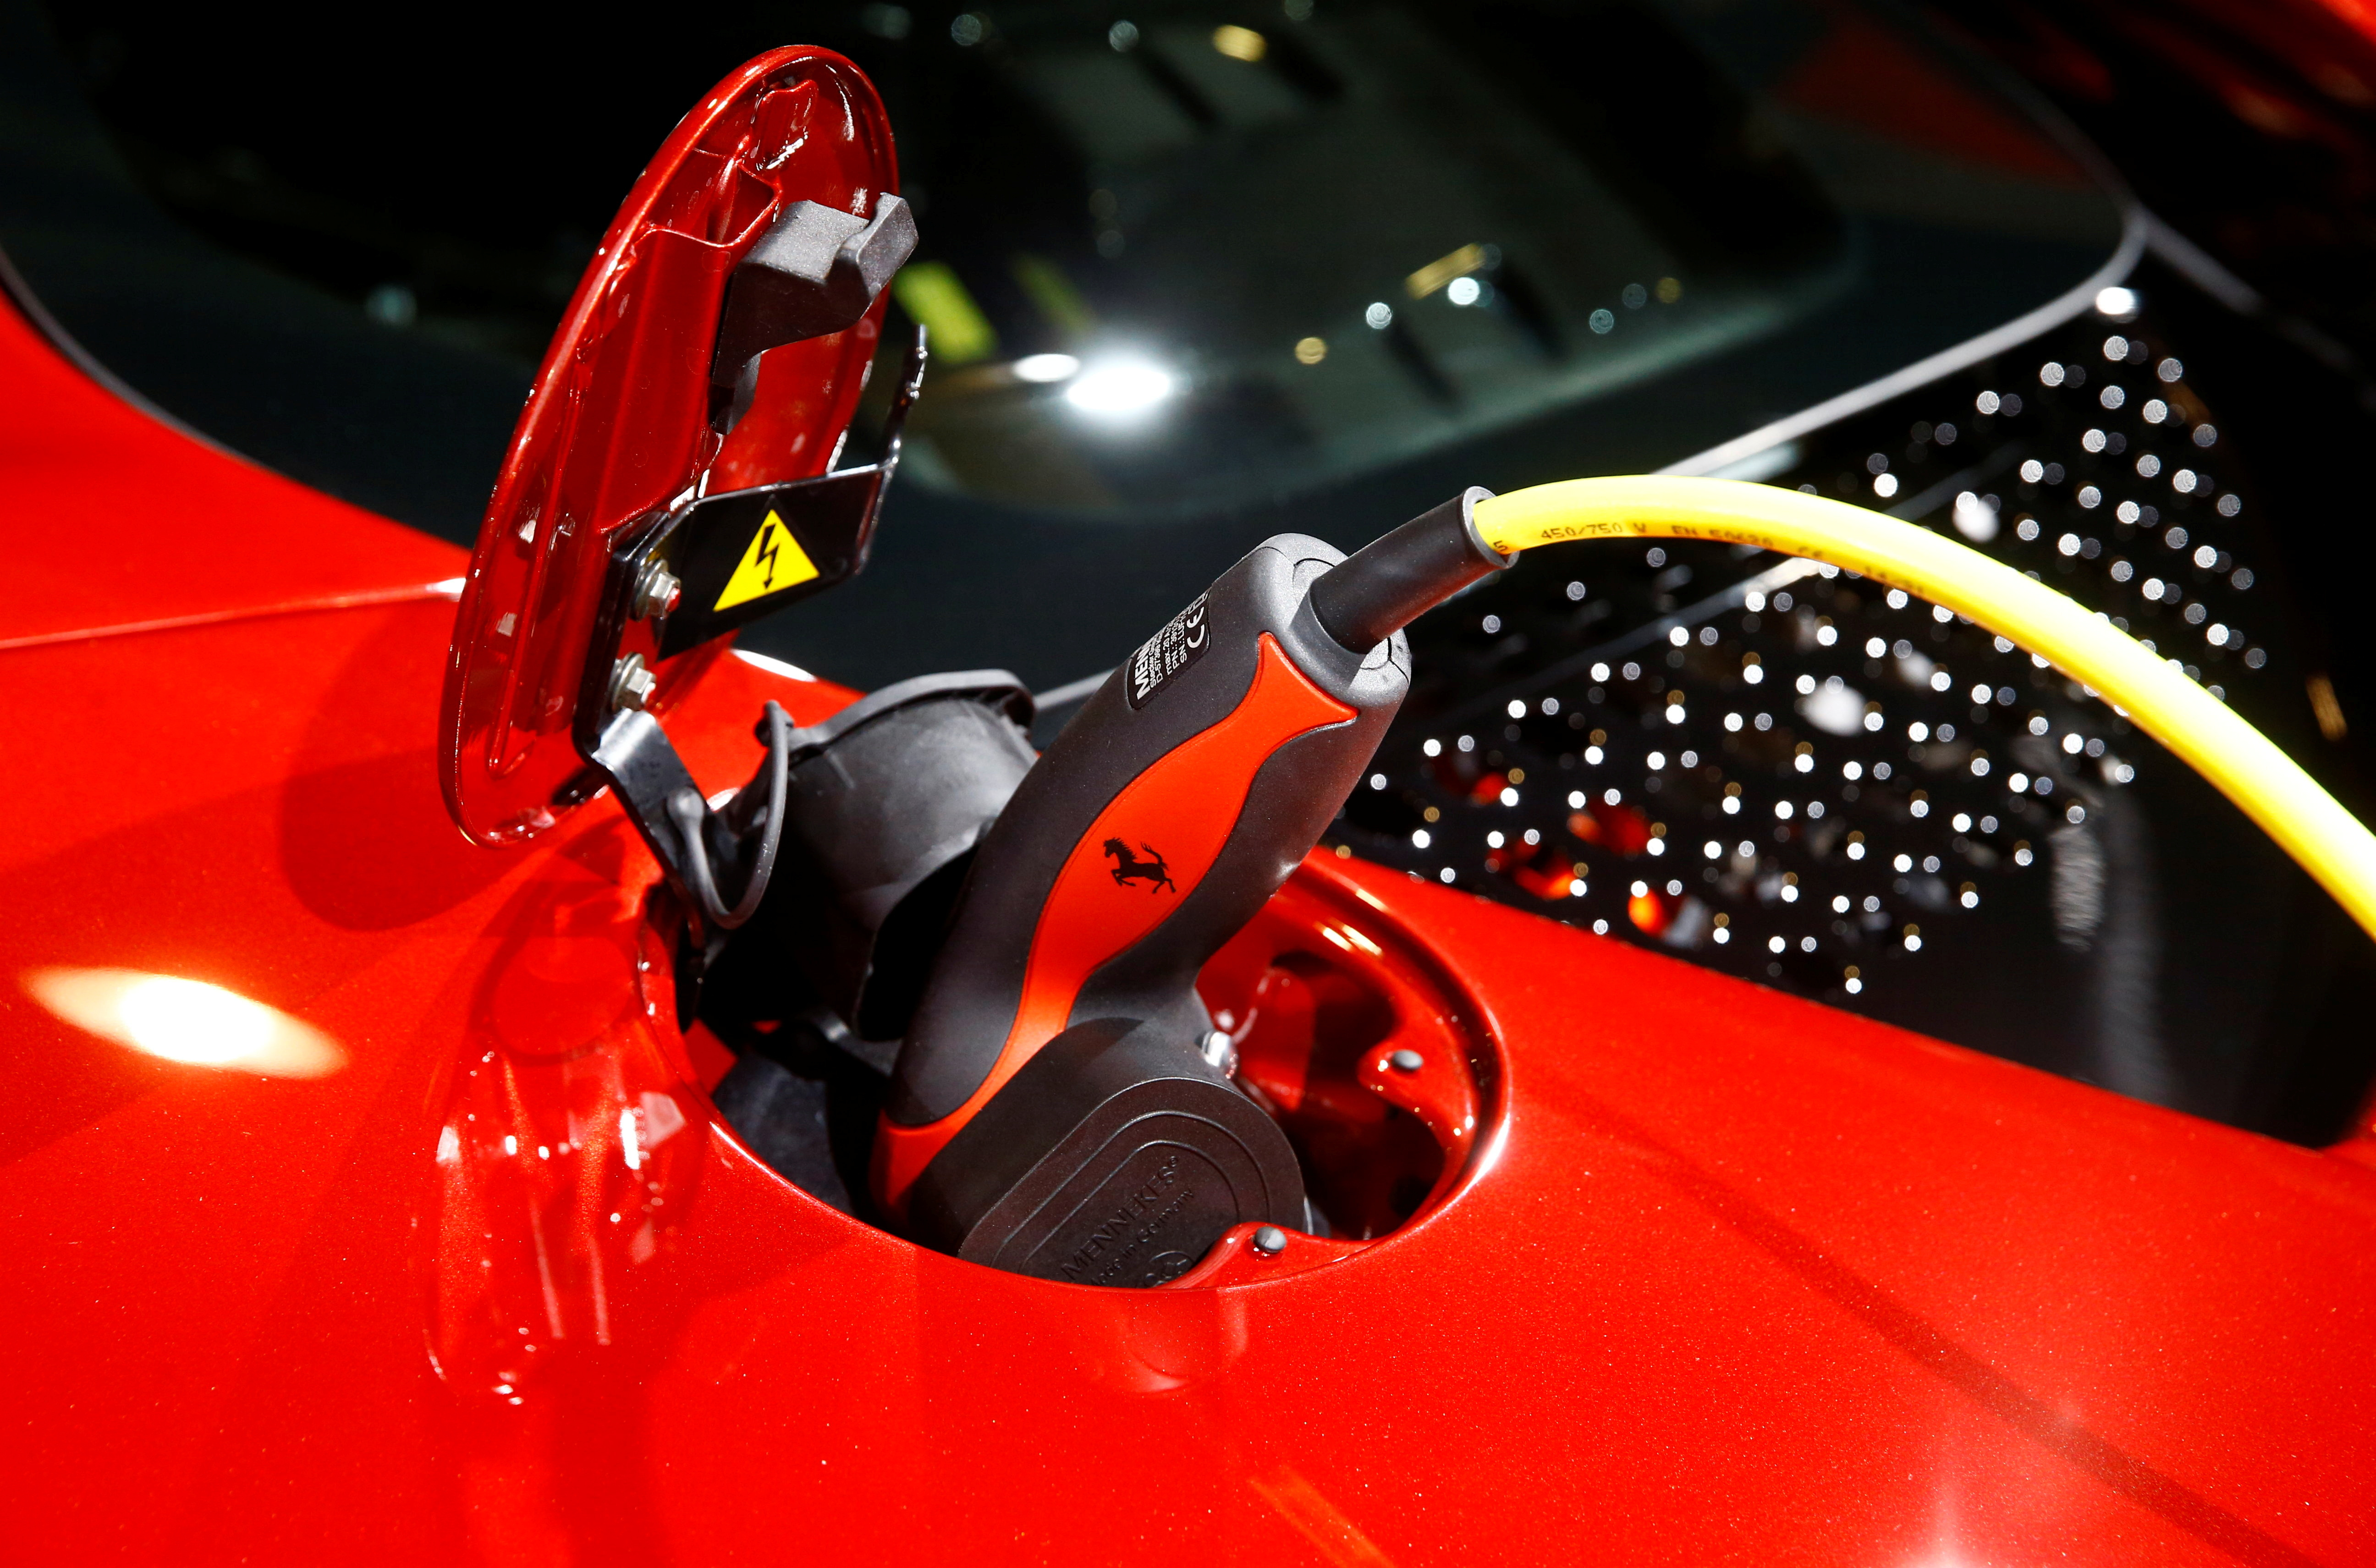 A Ferrari SF90 Stradale hybrid sports car is seen during at the Auto Zurich Car Show in Zurich